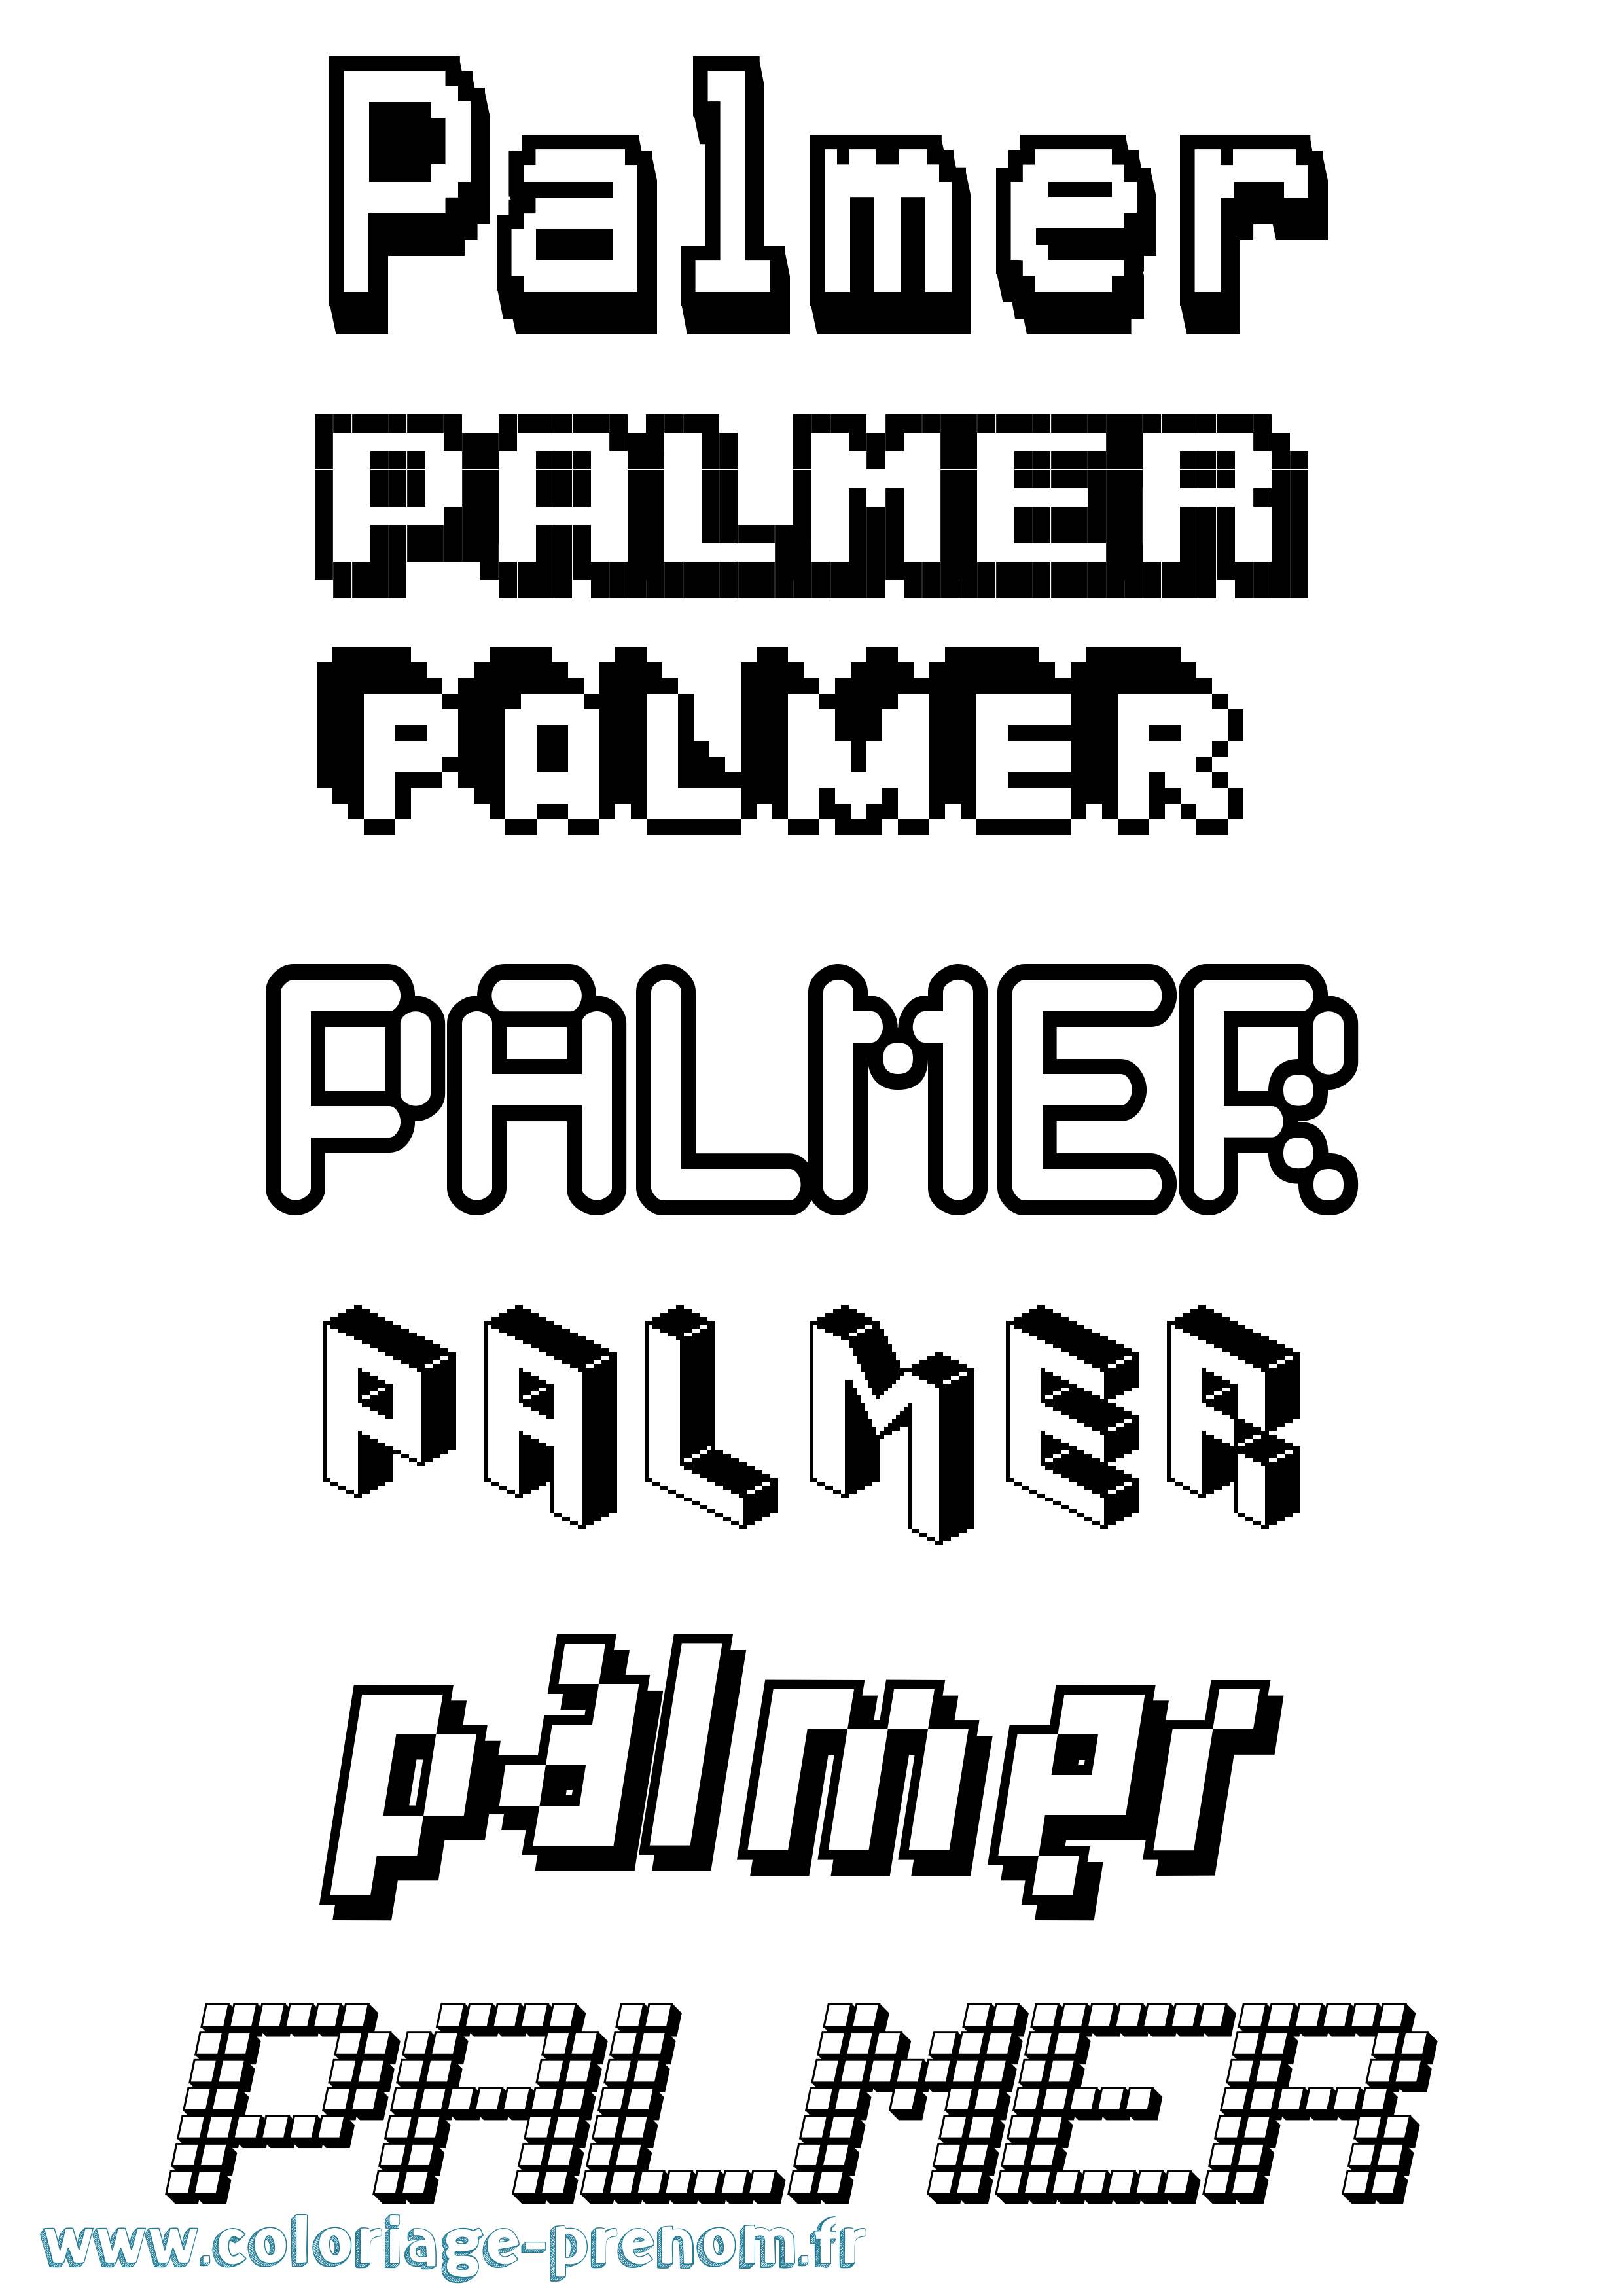 Coloriage prénom Palmer Pixel